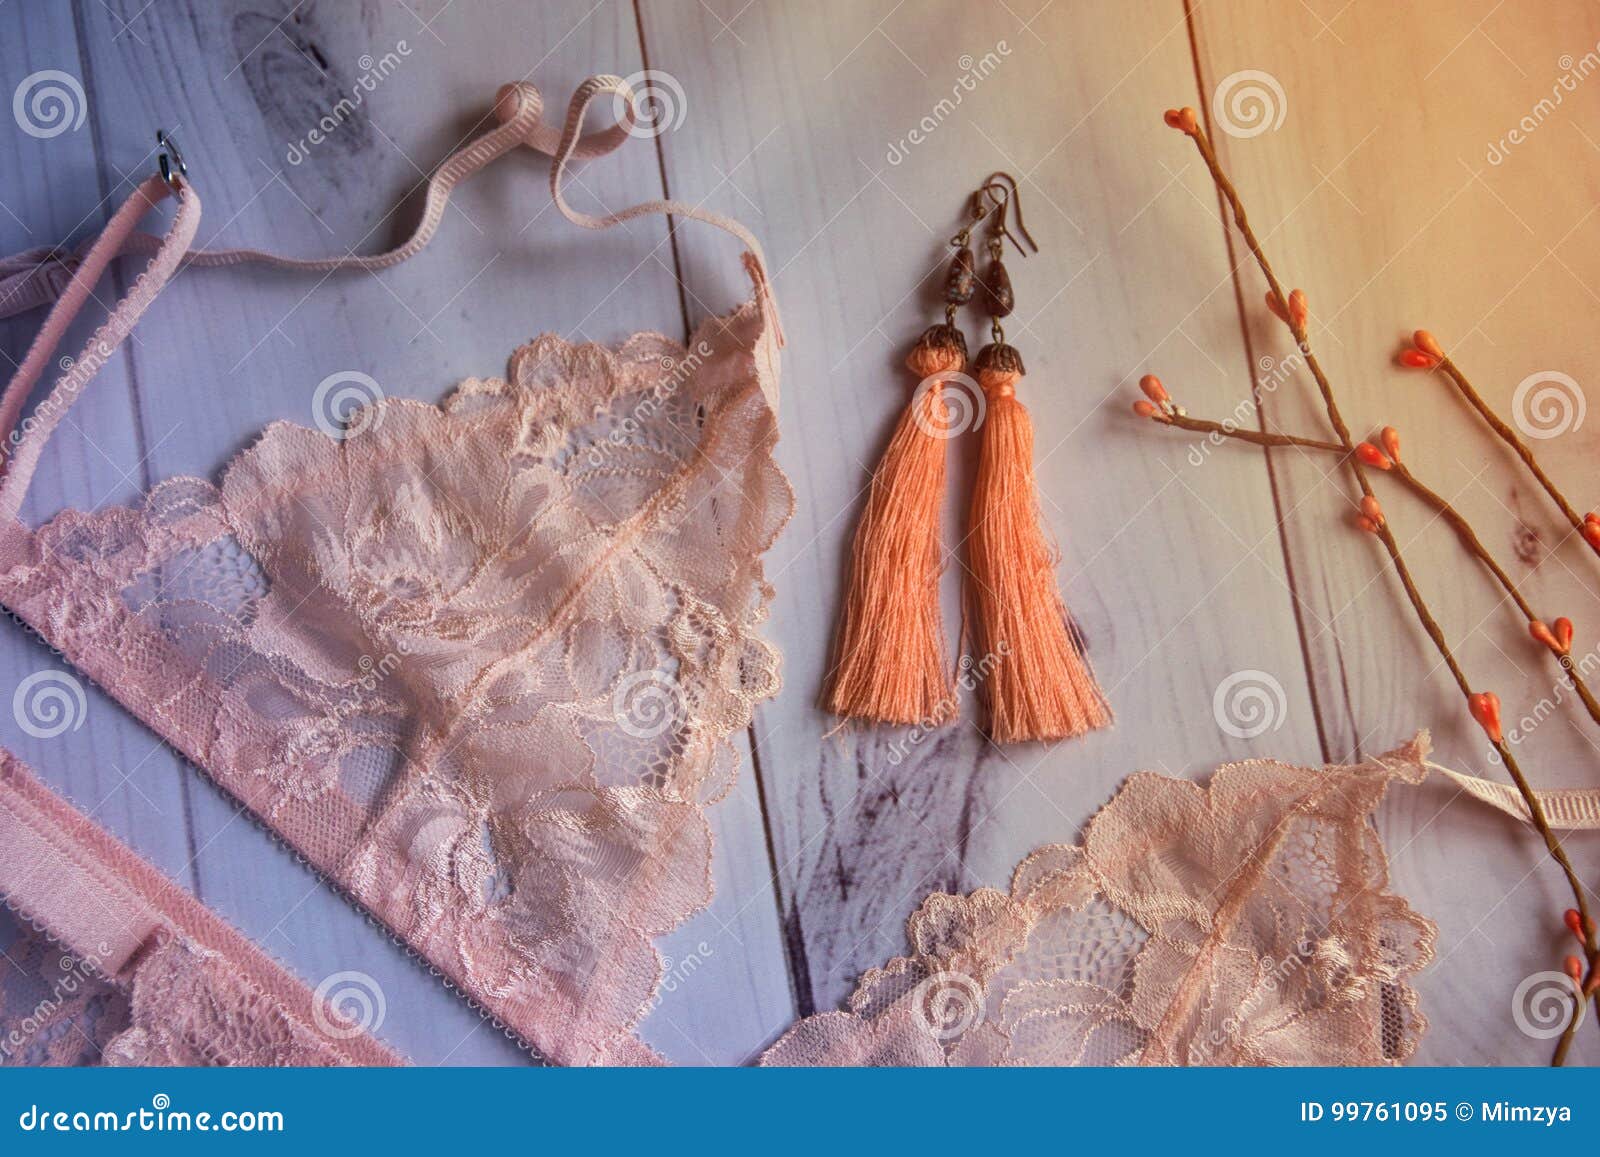 https://thumbs.dreamstime.com/z/lingerie-women-s-lacy-underwear-bust-wooden-white-background-soft-focus-lingerie-women-s-lacy-underwear-bust-99761095.jpg